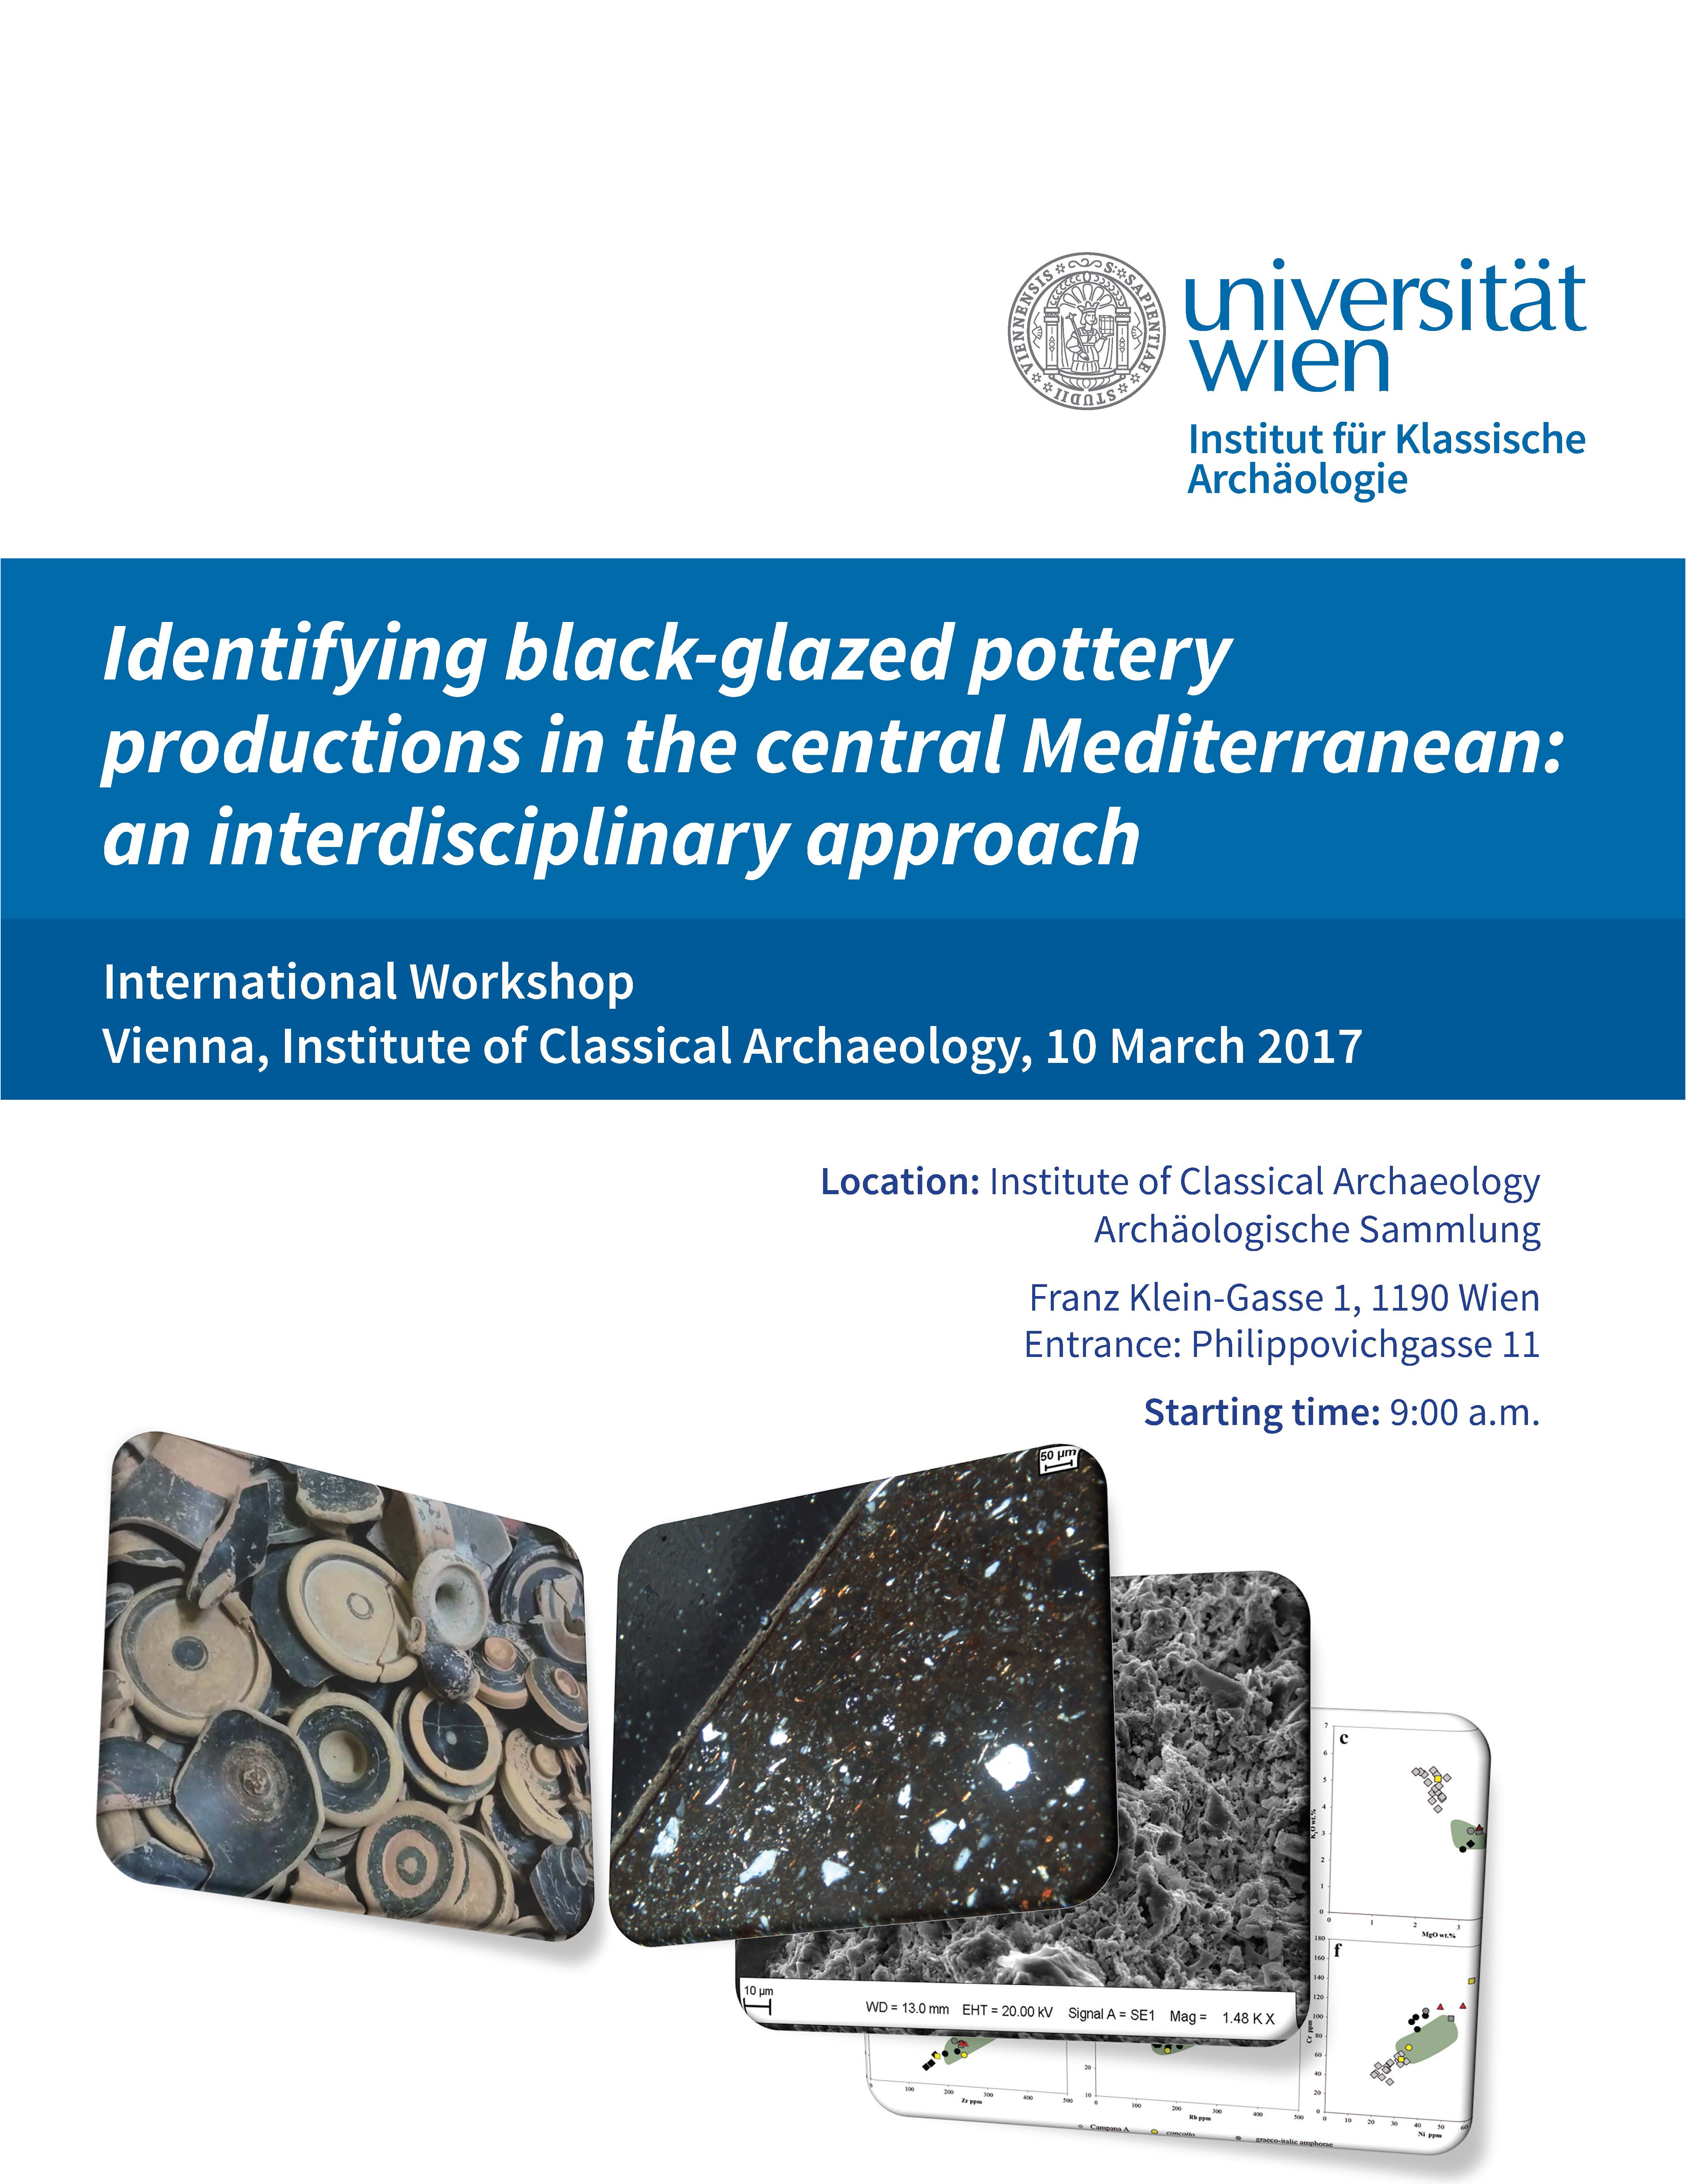 Identificiranje proizvodnih središta crnopremazane keramike na središnjem Mediteranu: interdisciplinarni pristup